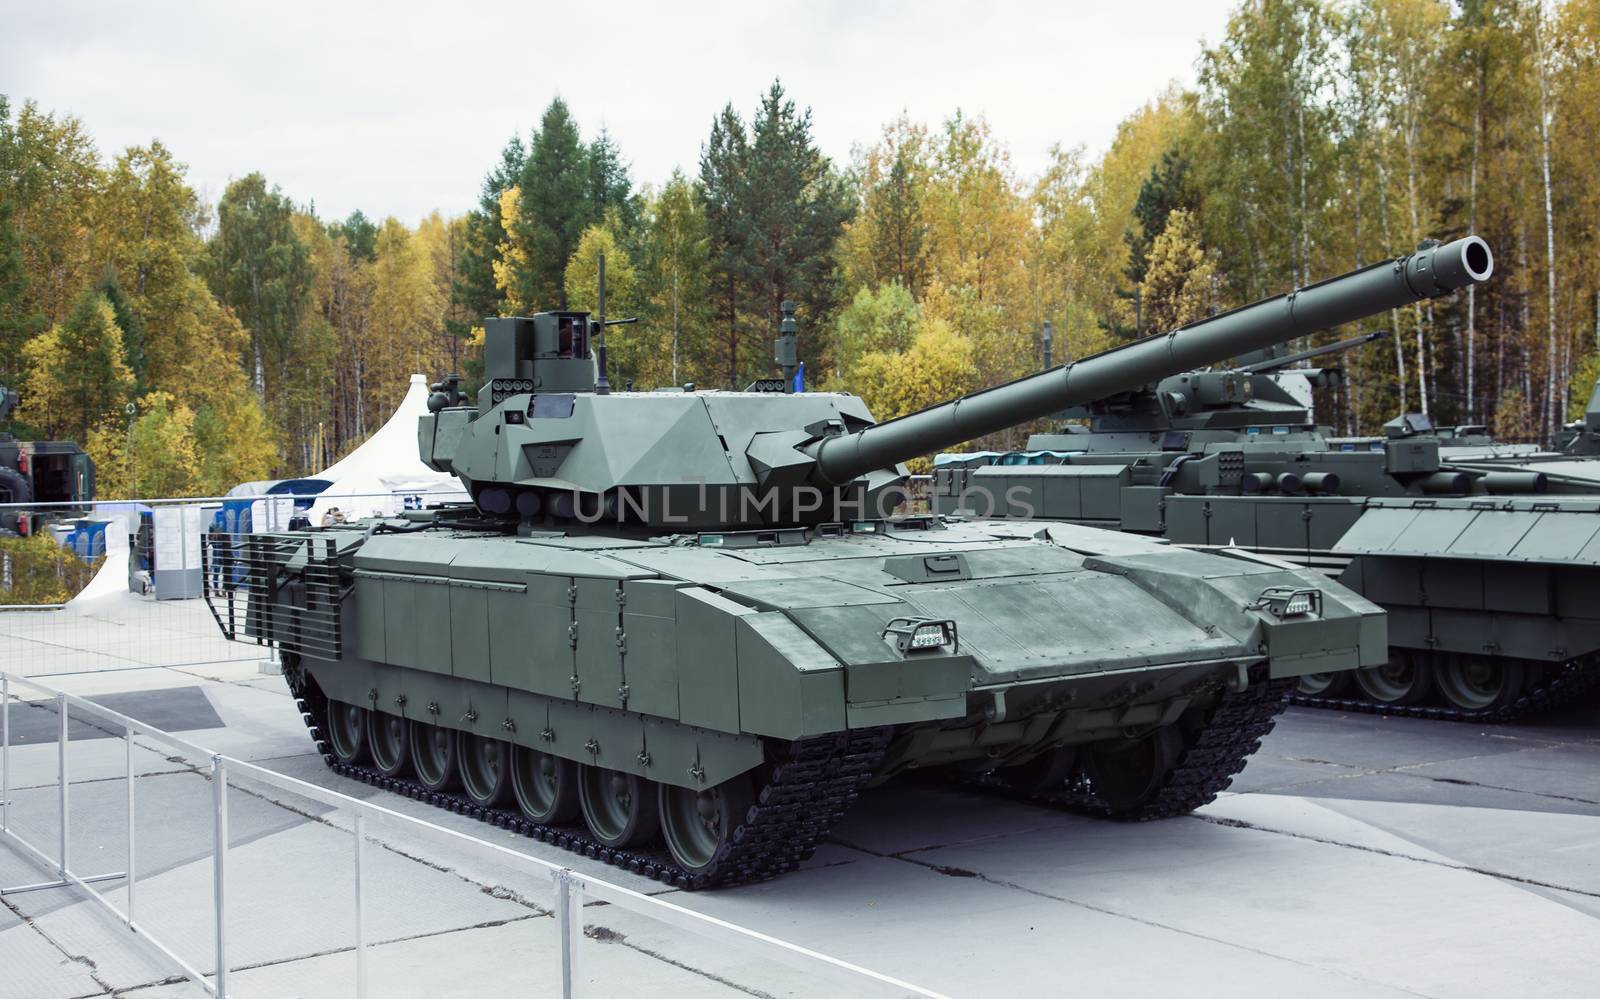 T-14 Armata. Russian 5th generation main battle tank